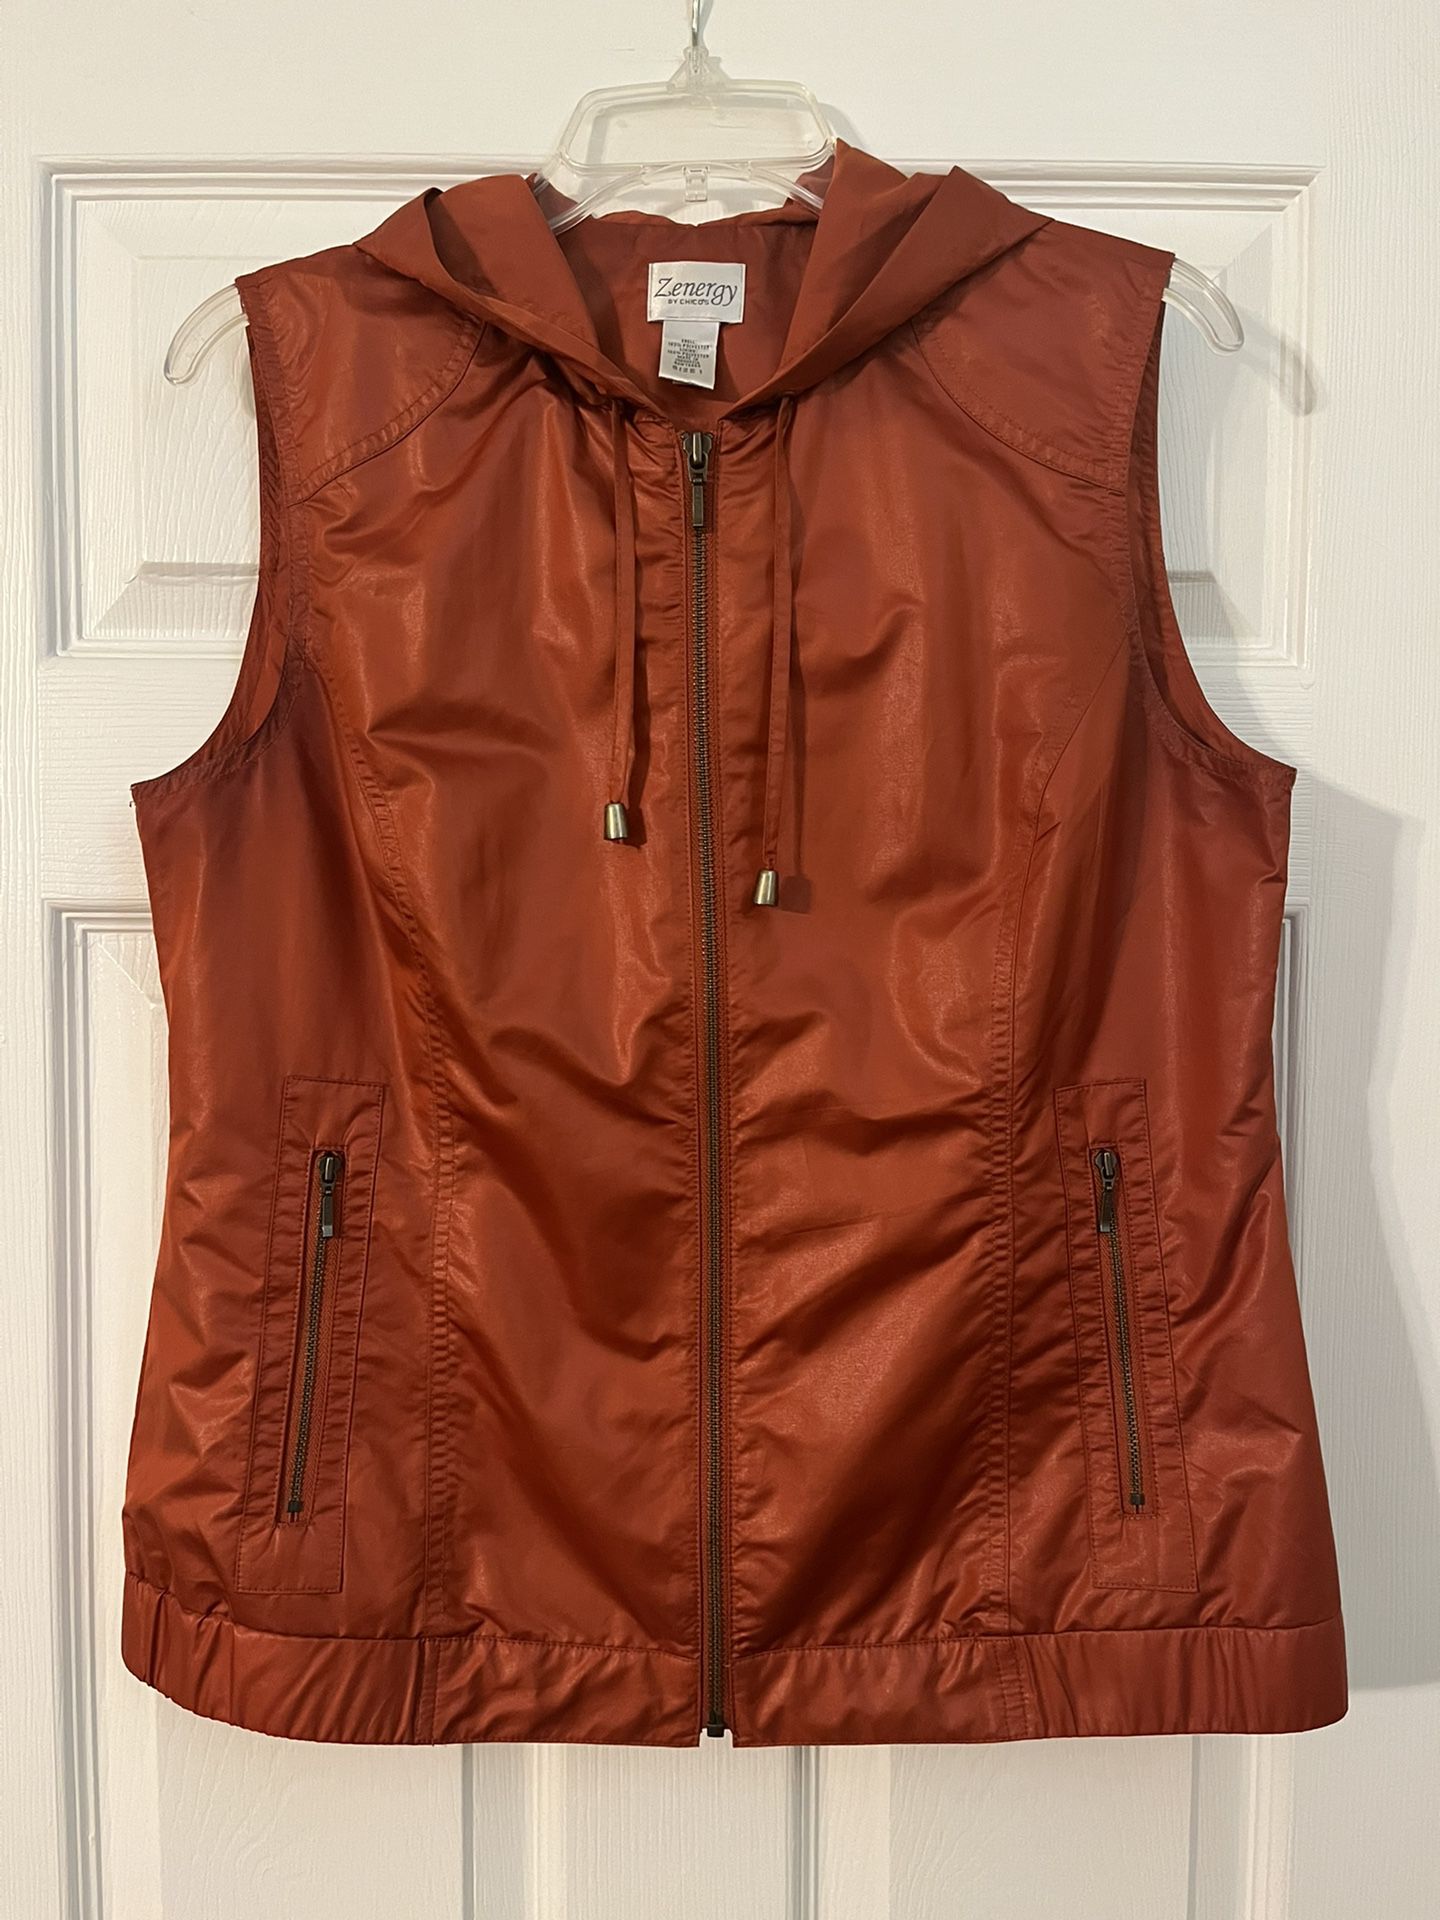 Zenergy by Chico’s Burnt Orange Zipperedi Vest Jacket with Hoodie Soft Silky Size 1 Small